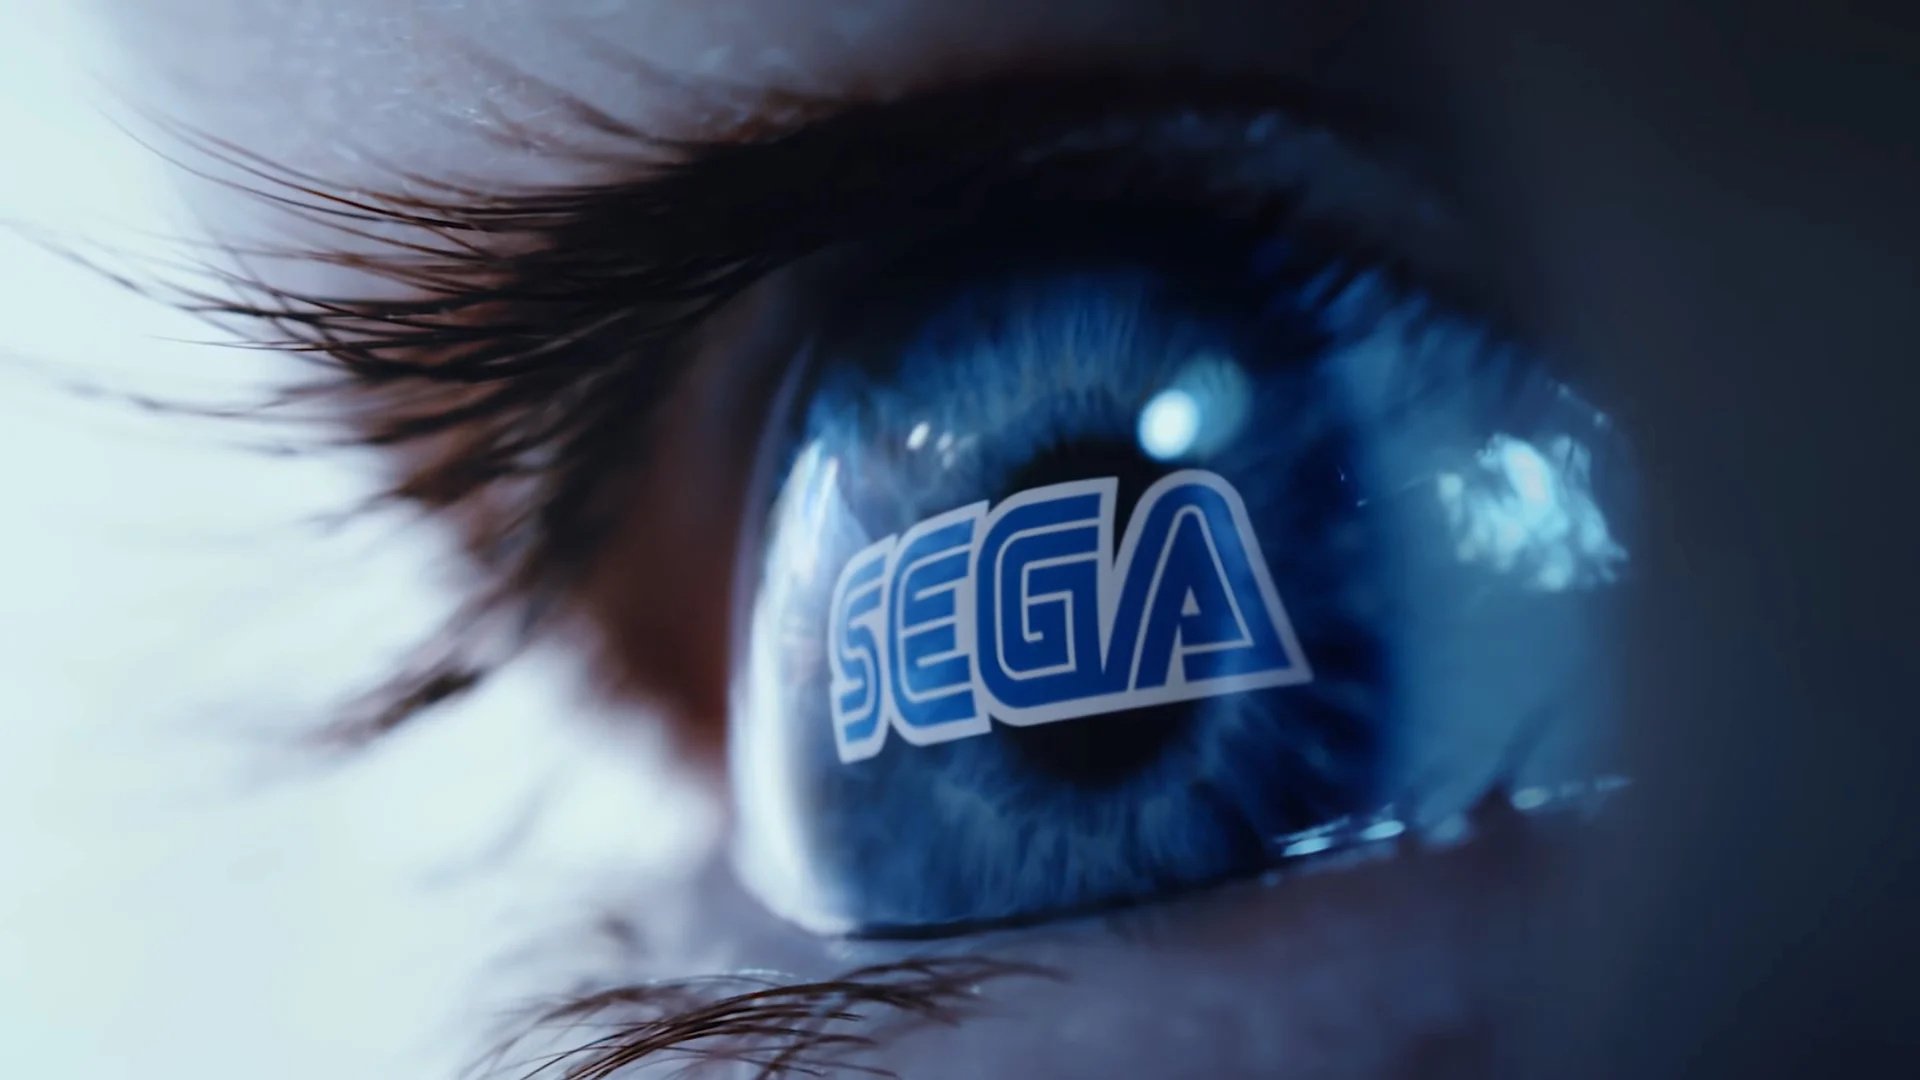 Sega tiết lộ kế hoạch làm một 'Super Game'